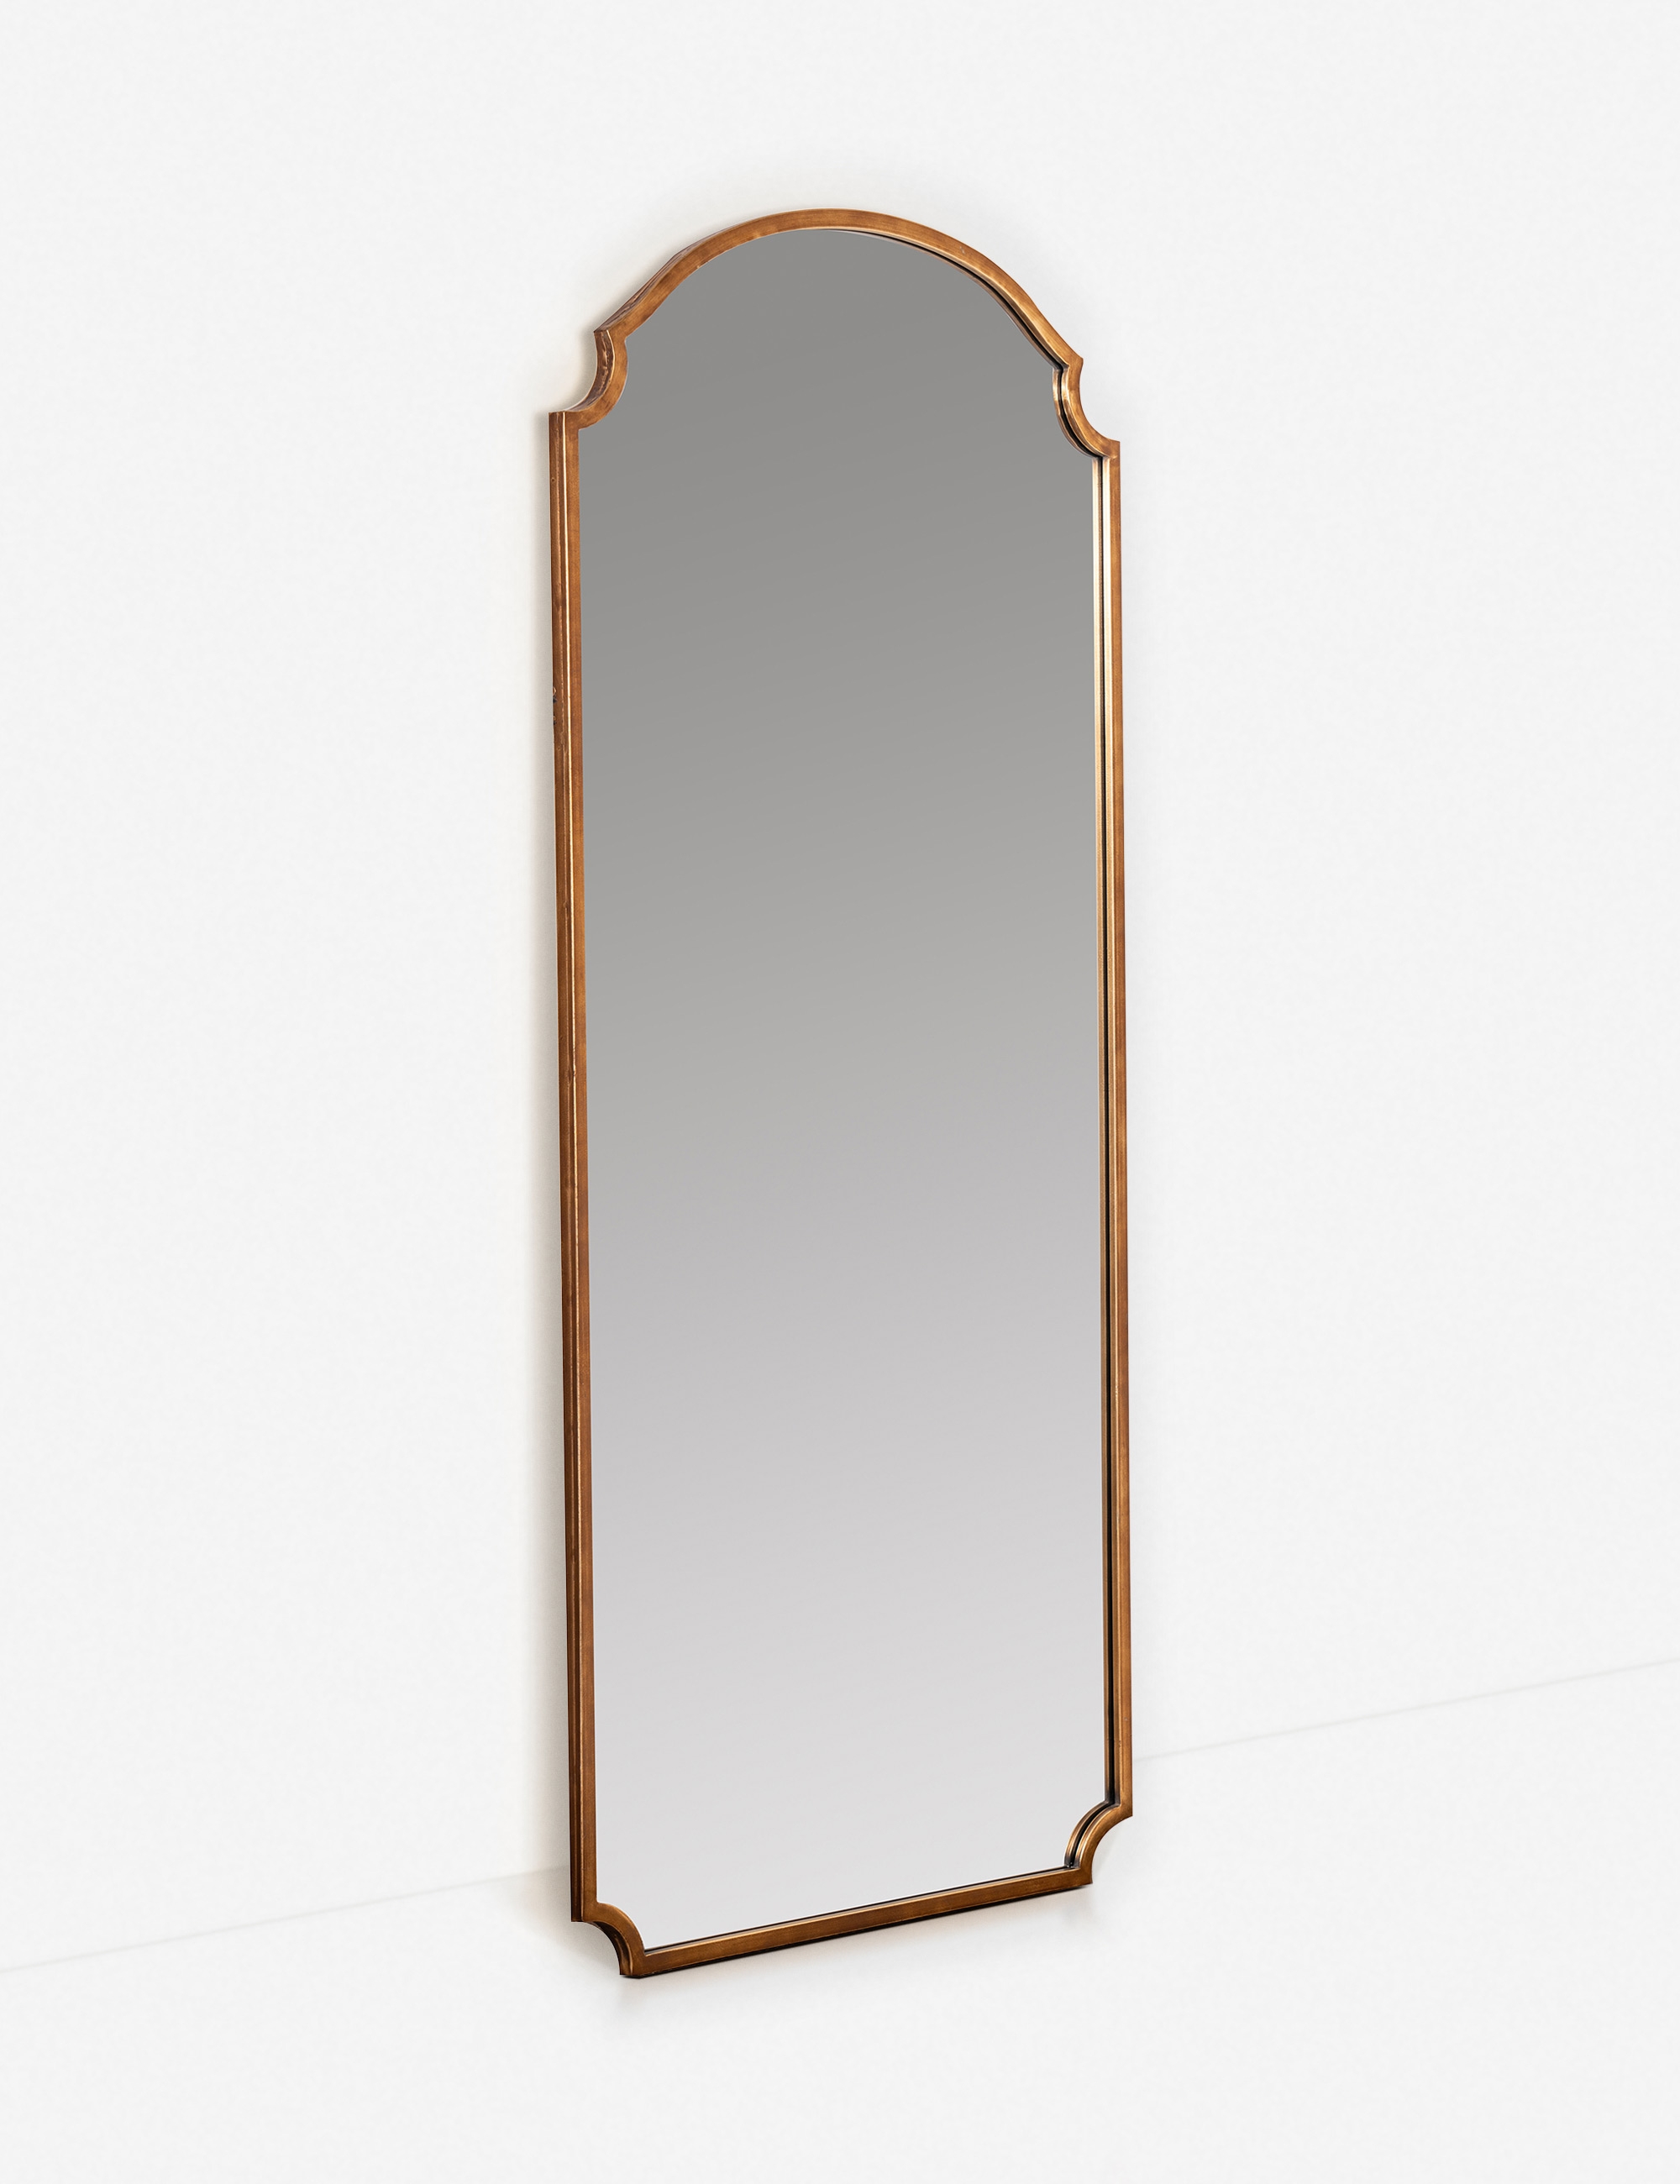 Whitley Floor Mirror - Image 1